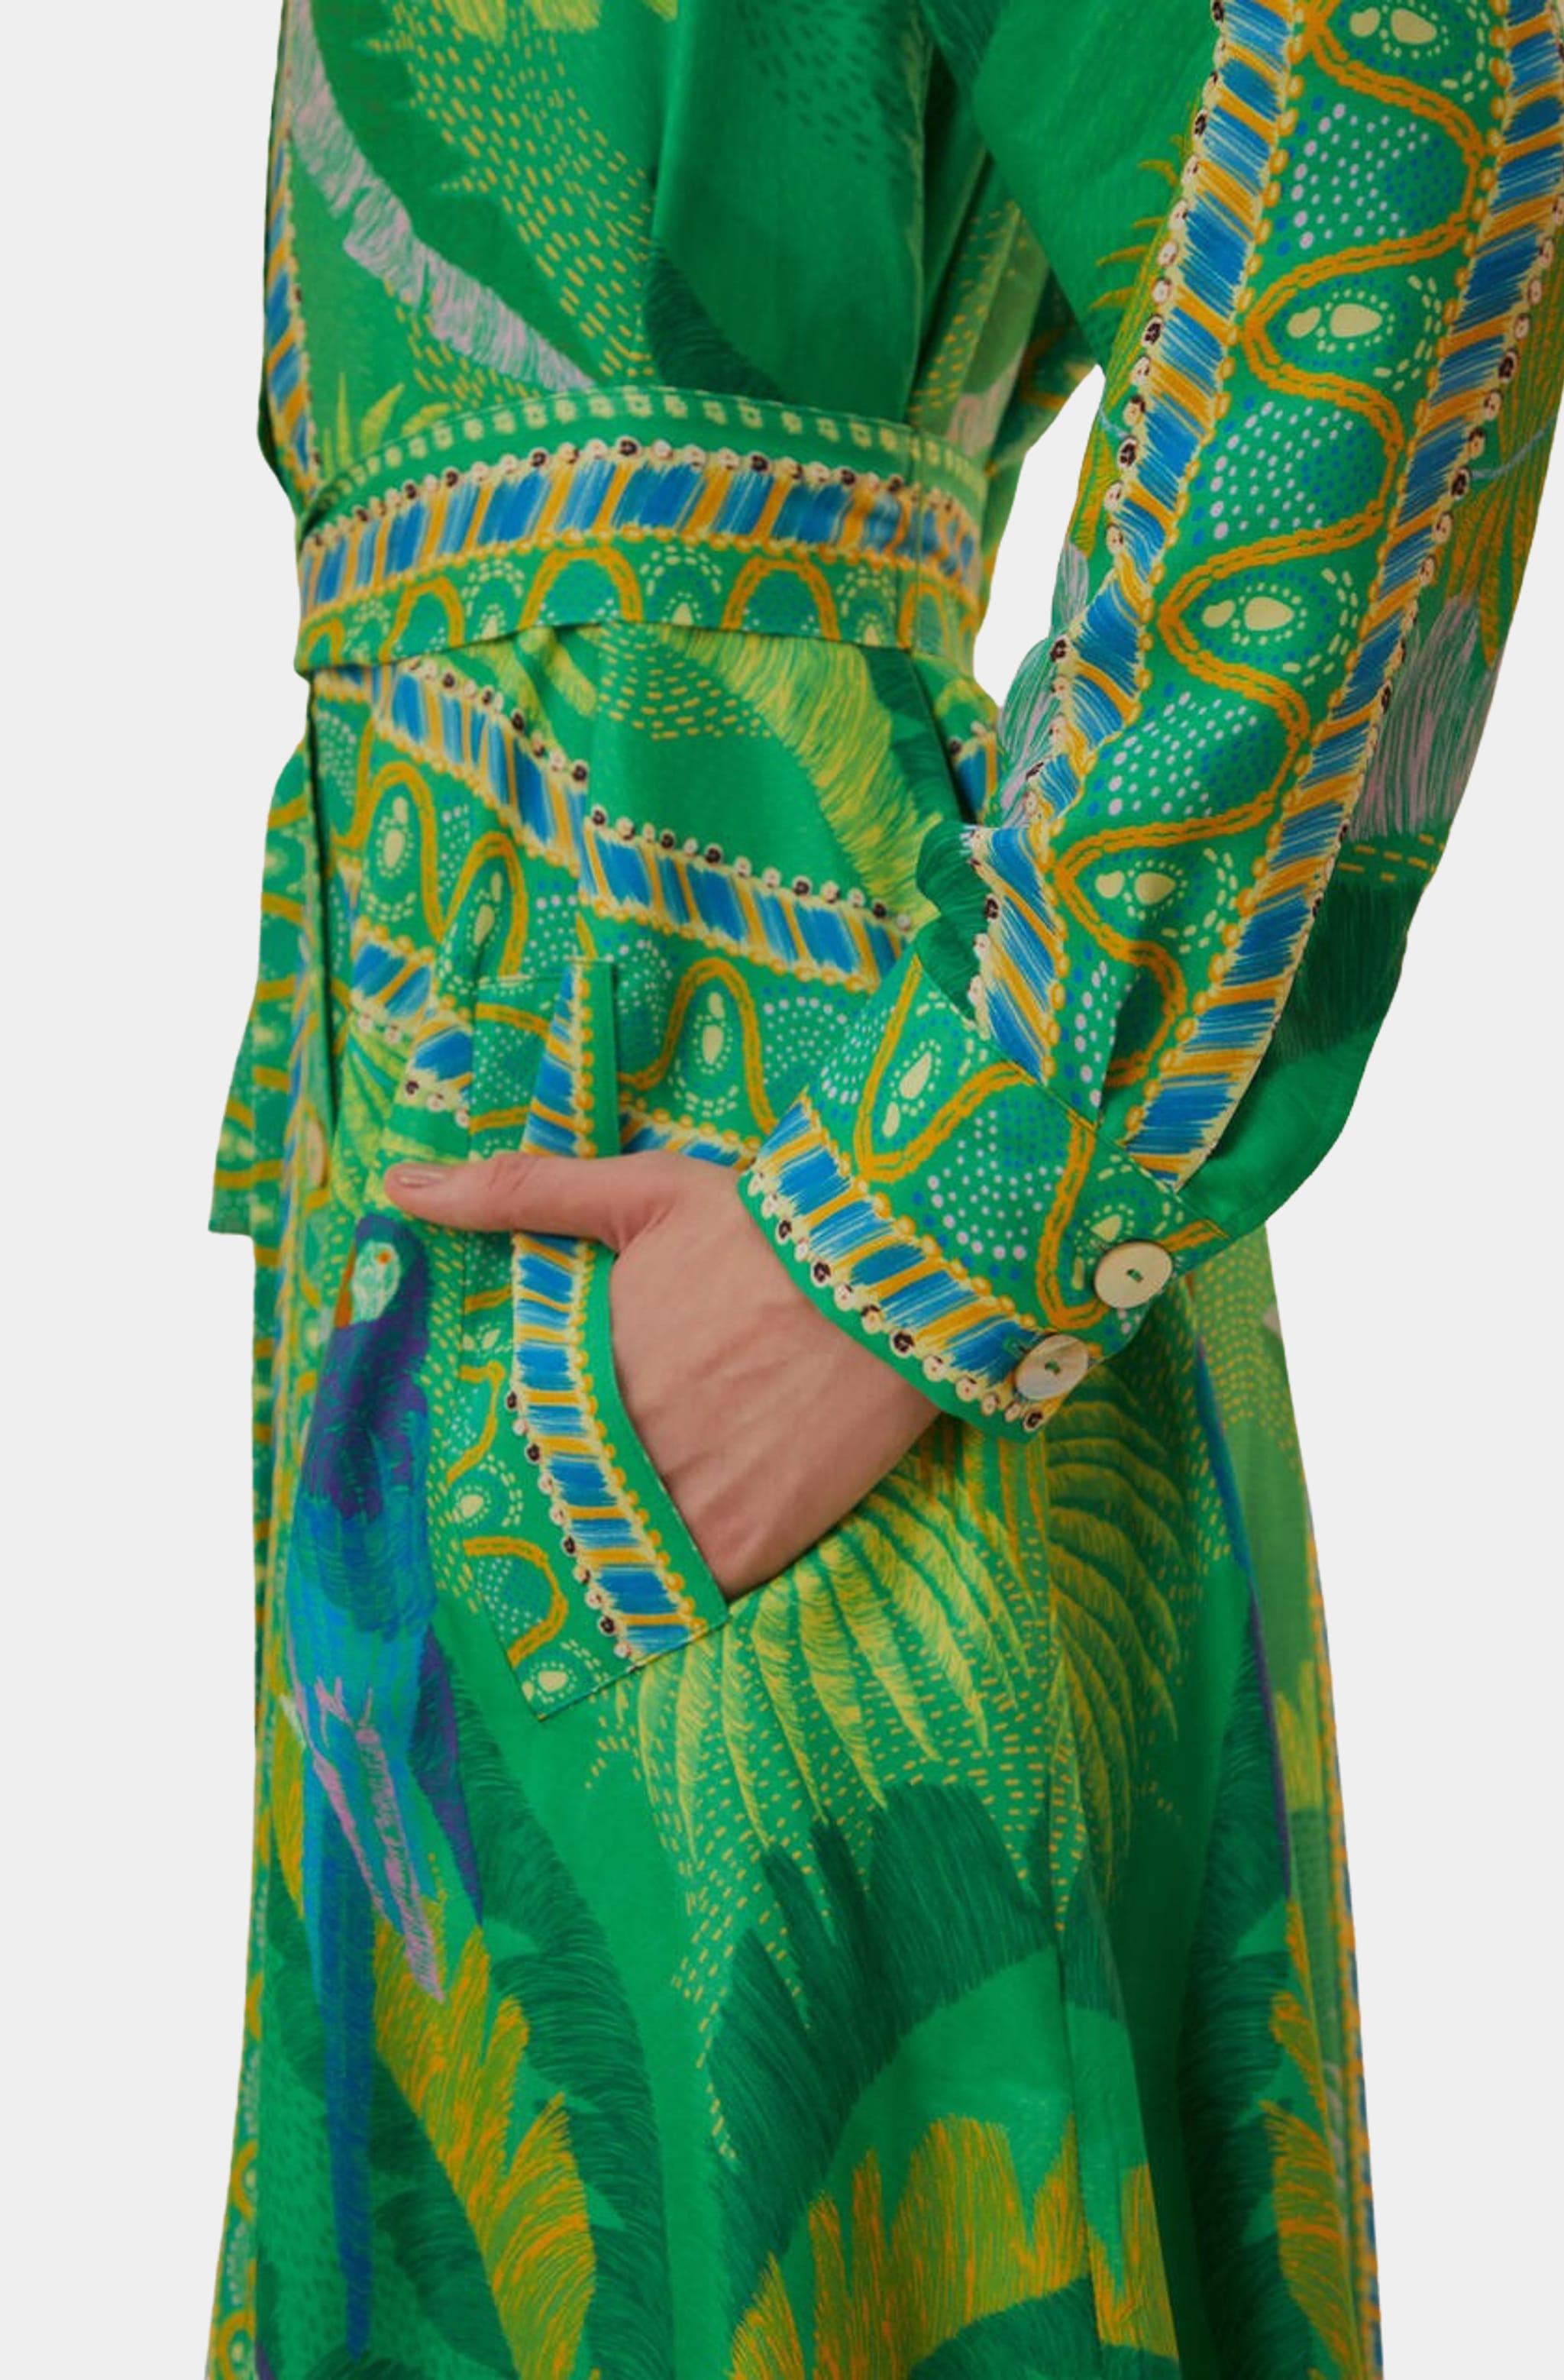 Macaw Scarf Green Chemise Dress